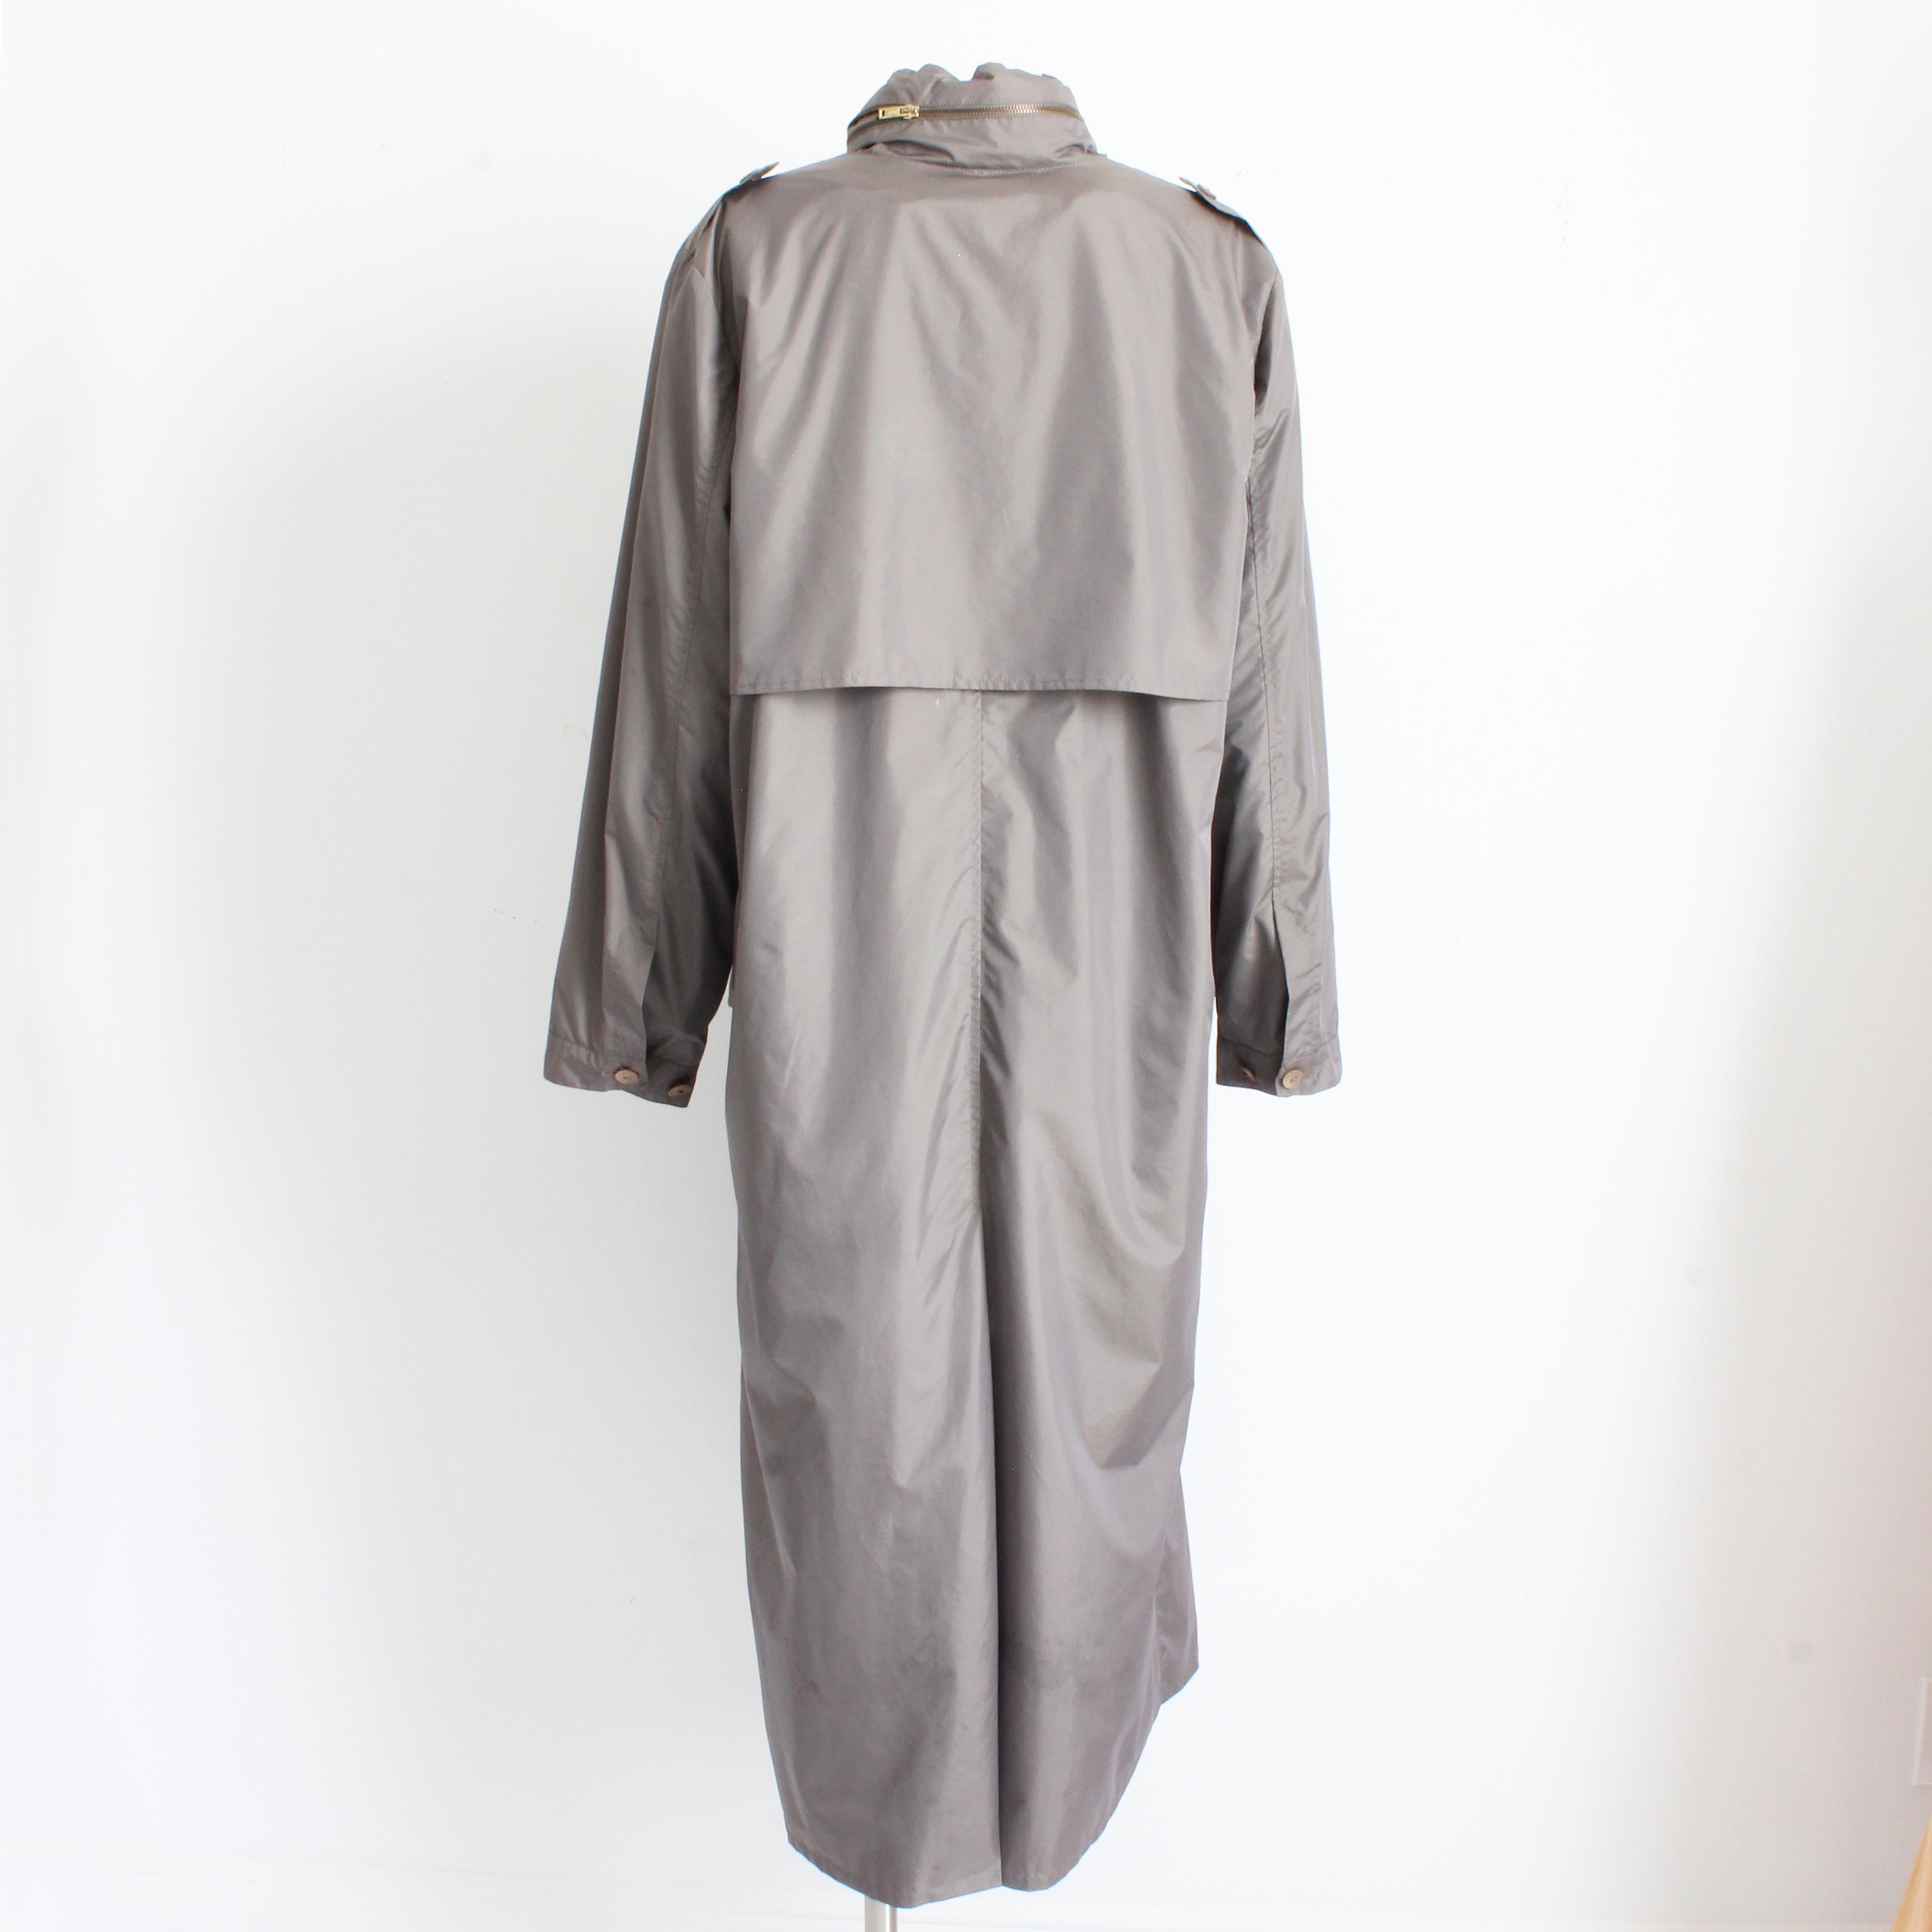 Sonia Rykiel Paris Rain Coat Trench Coat with Hood Lined Vintage 1990s  For Sale 2